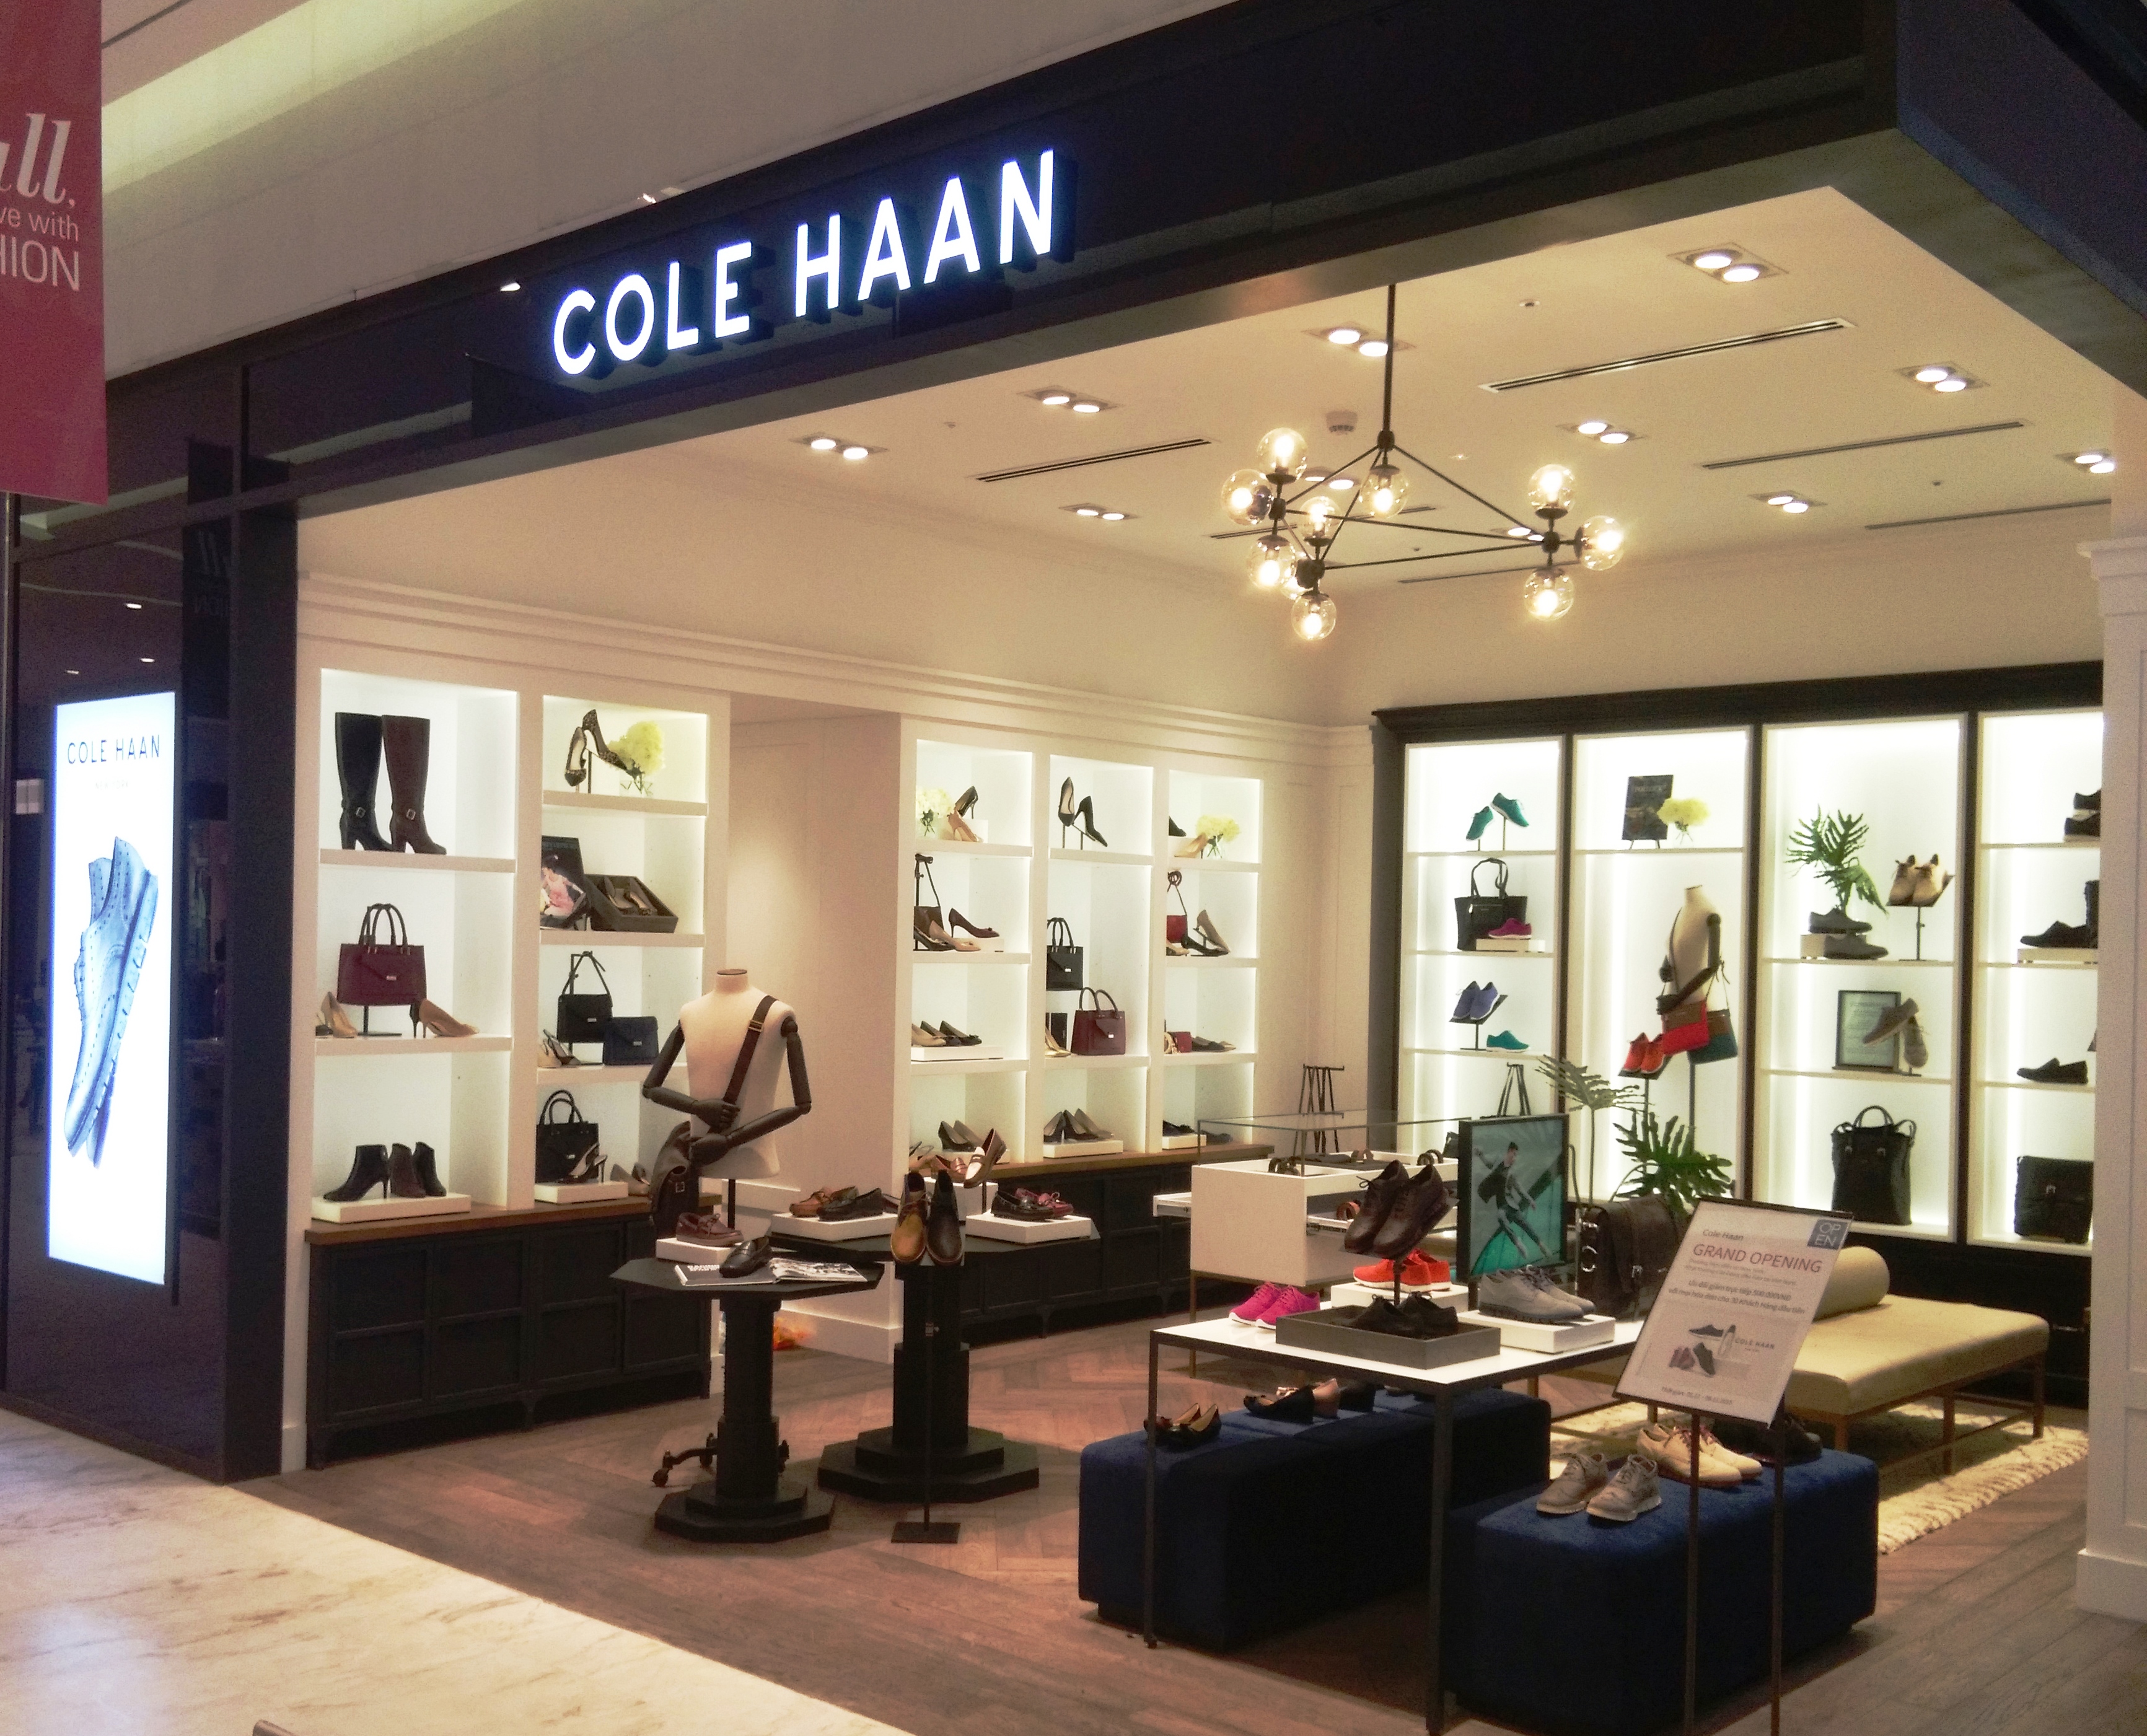 Cửa hàng Cole Haan ở Lotte Department Store (Hà Nội).